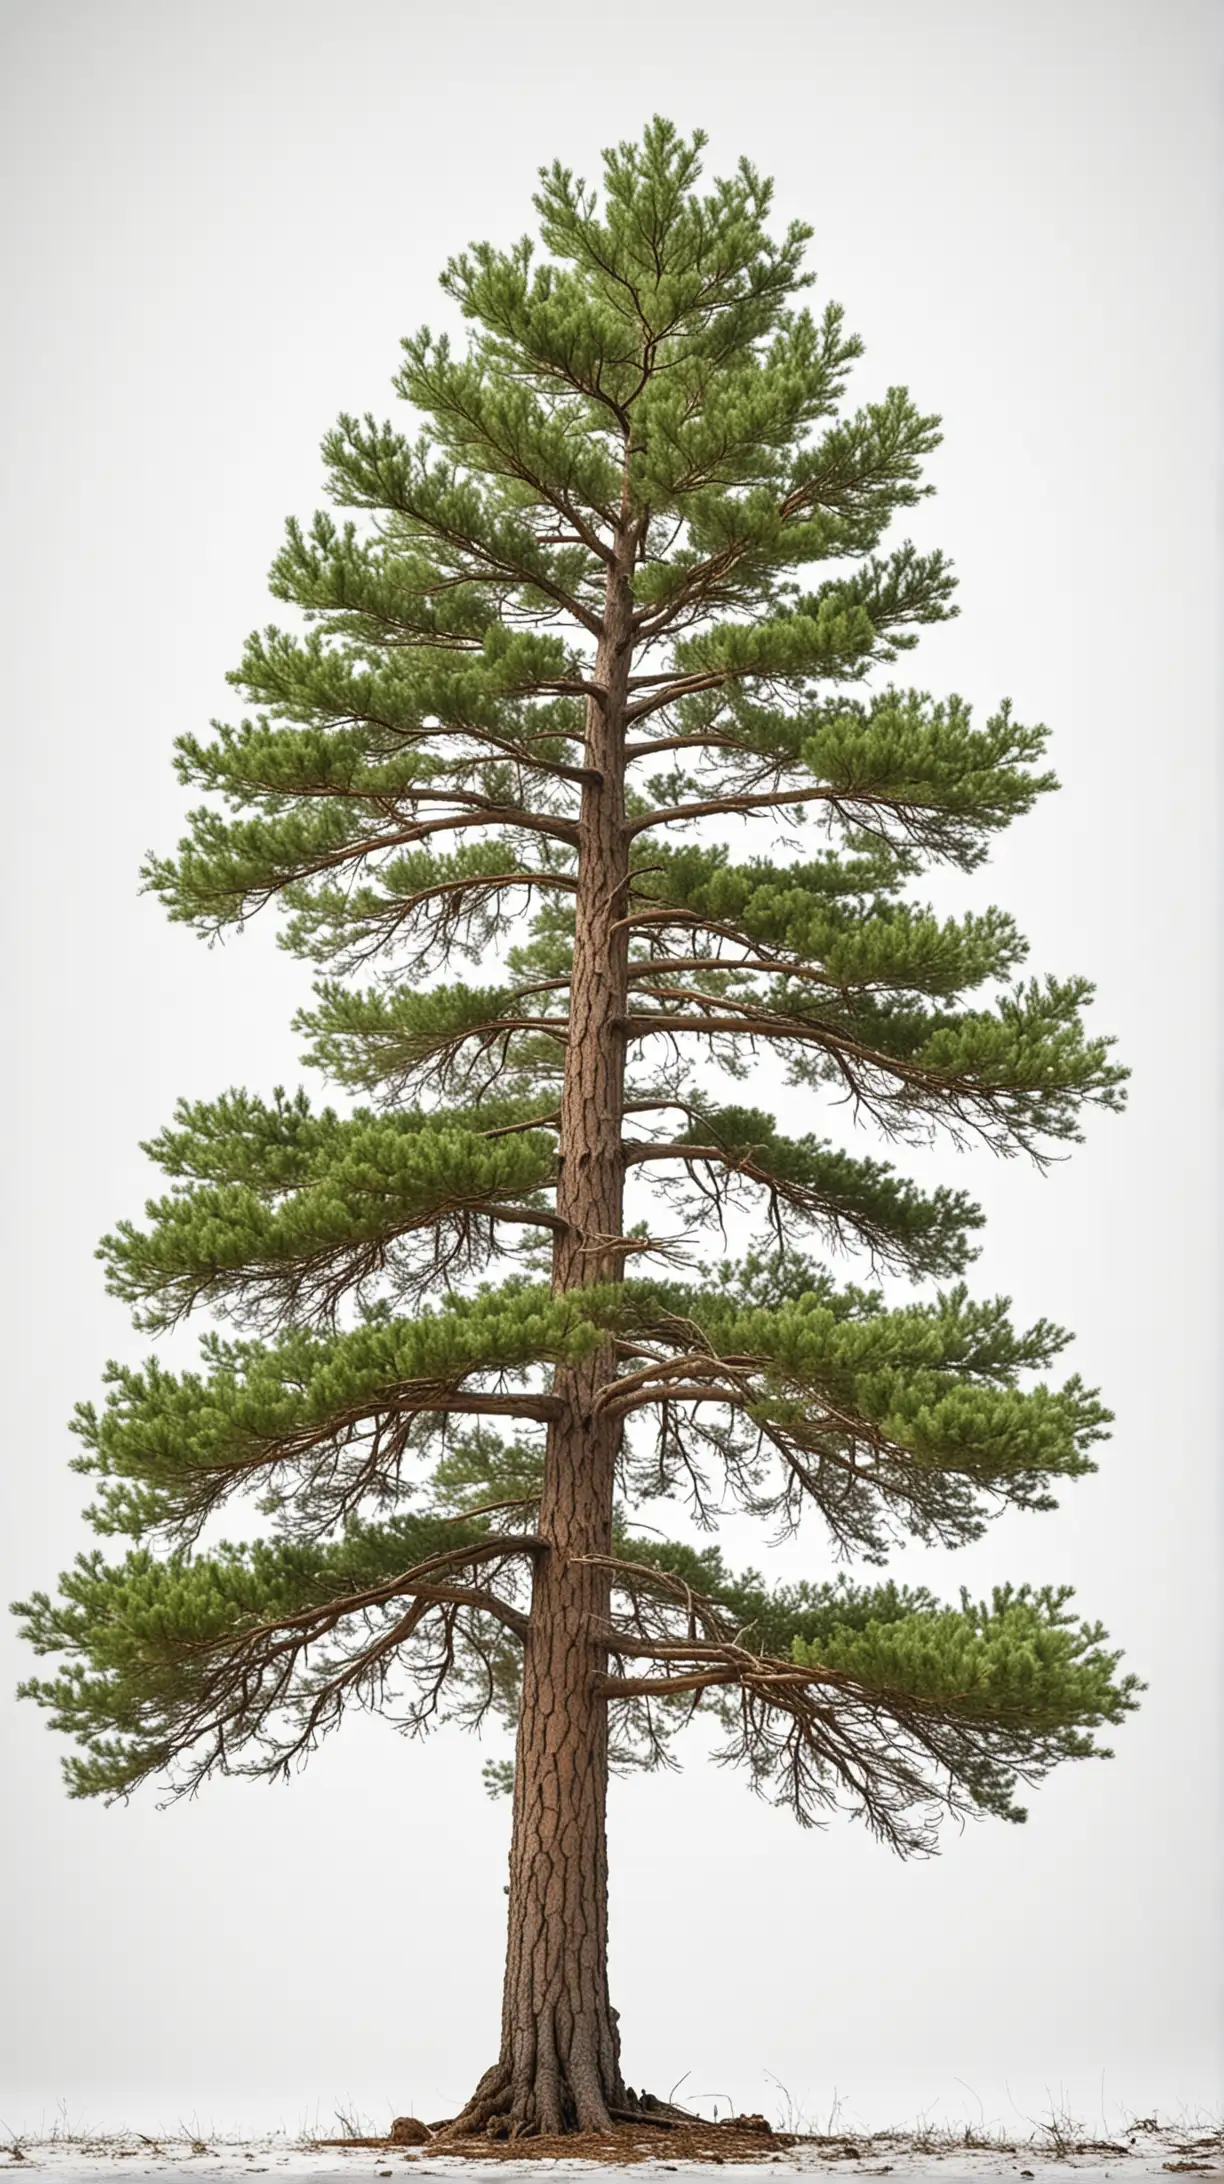 Rustic Pine Tree in Snowy Wilderness